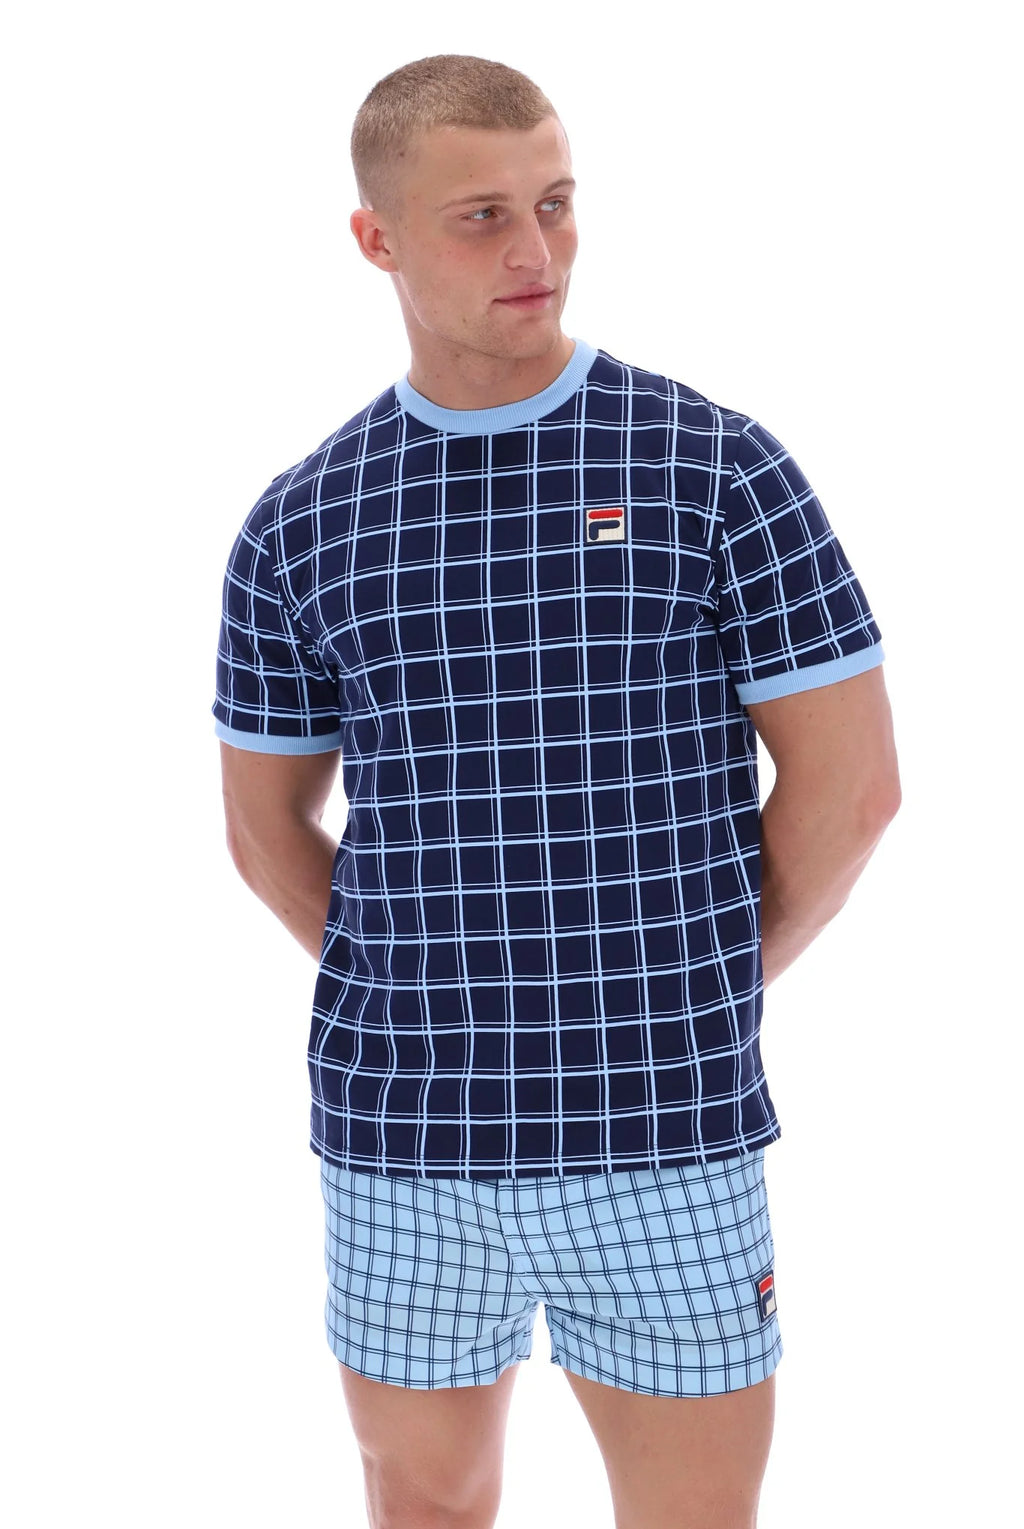 FILA Freddie Check Contrast Rib Tee Navy/Blue - Raw Menswear